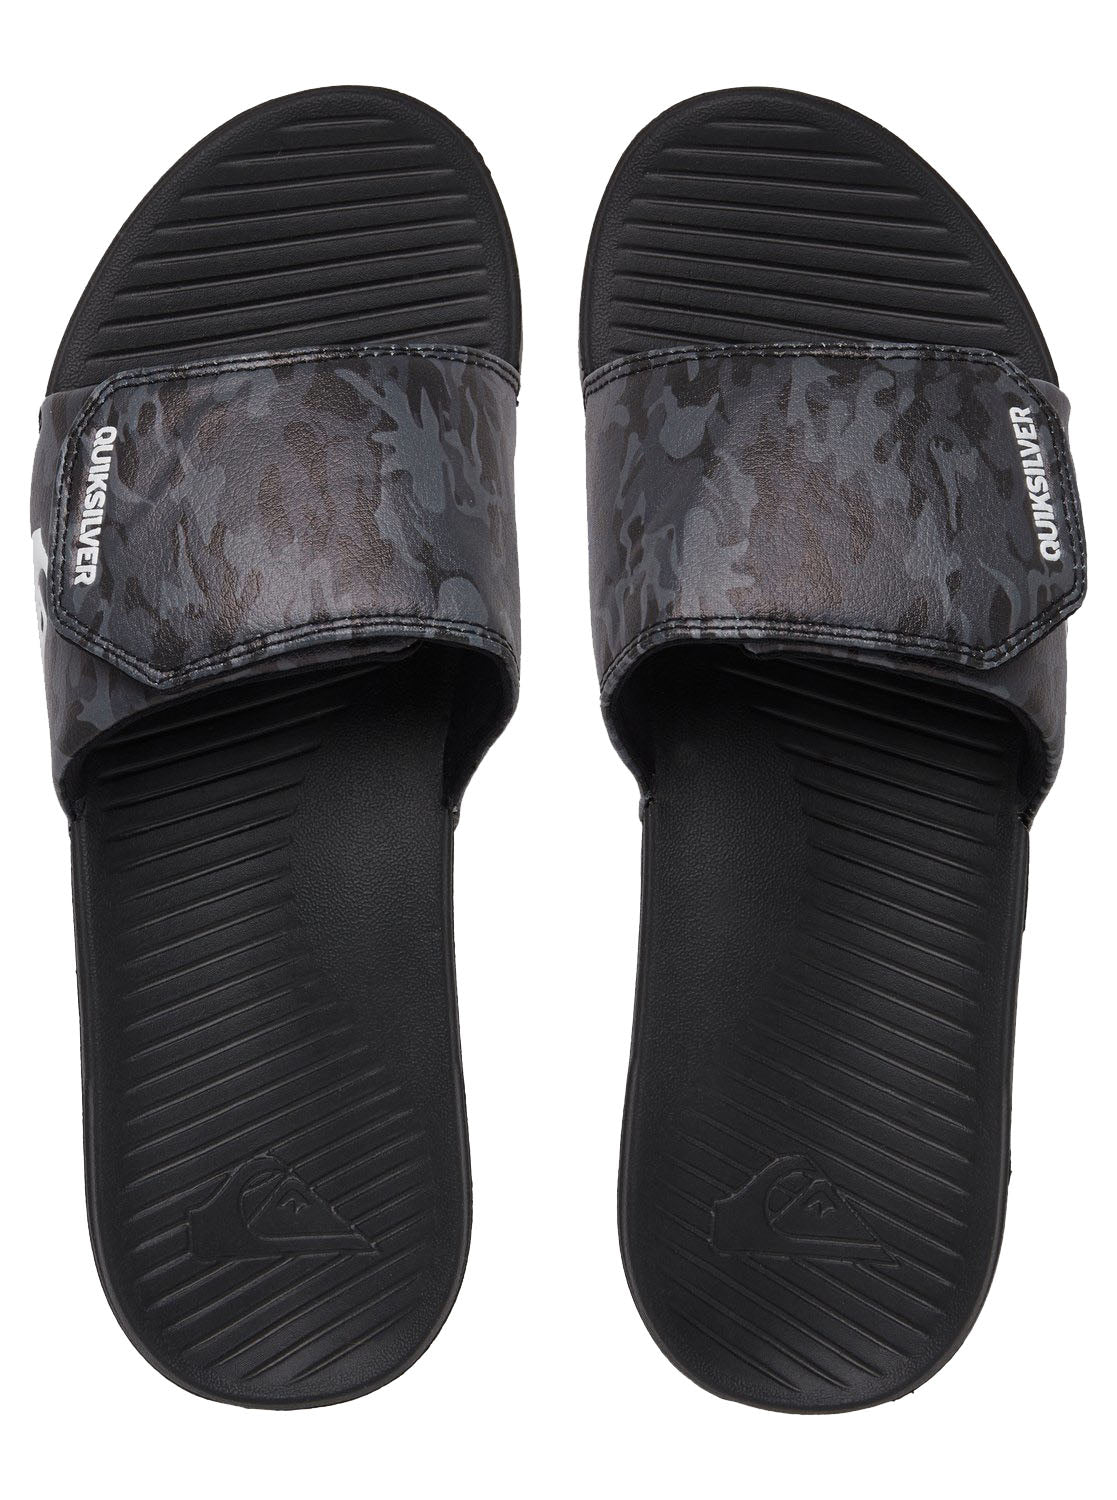 Quiksilver Bright Coast Adjust Mens Sandal XSKK-Grey-Black-Black 8